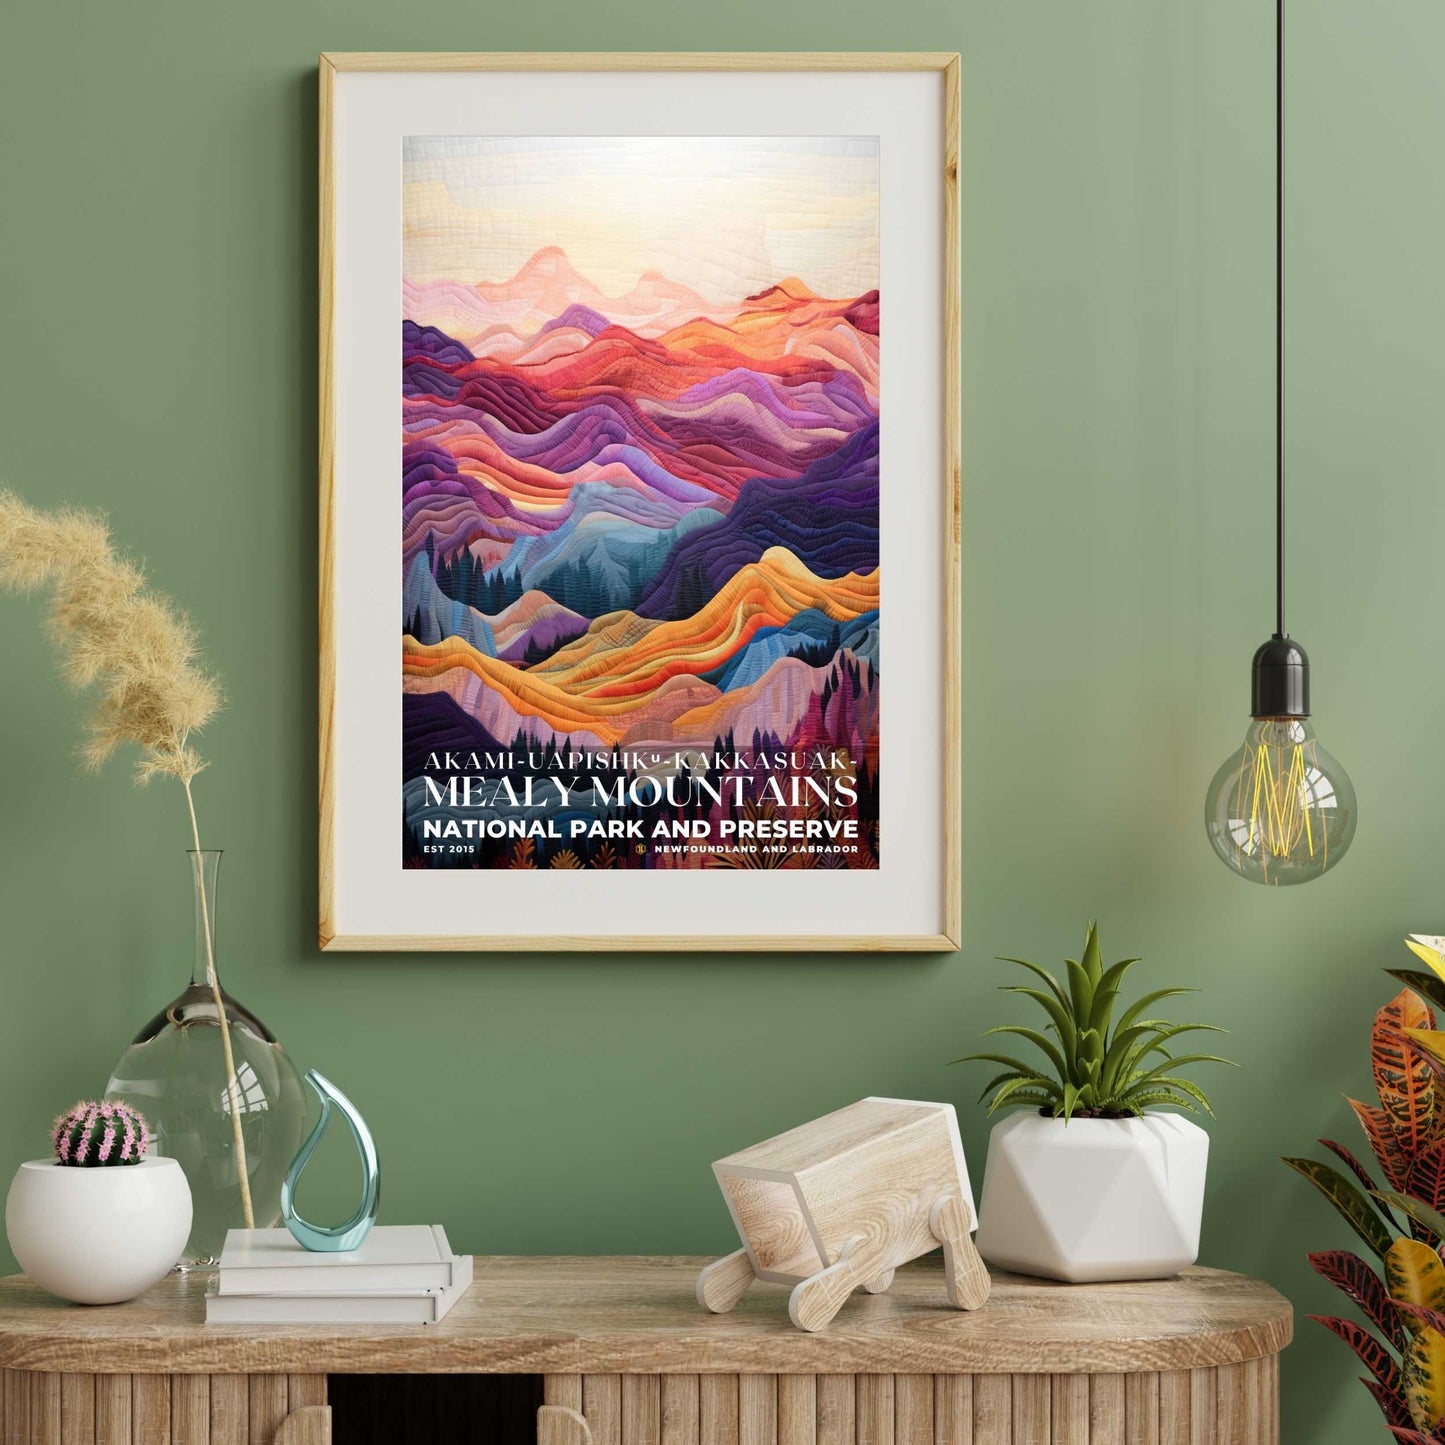 Akami-Uapishk-KakKasuak-Mealy Mountains National Park Poster | S09